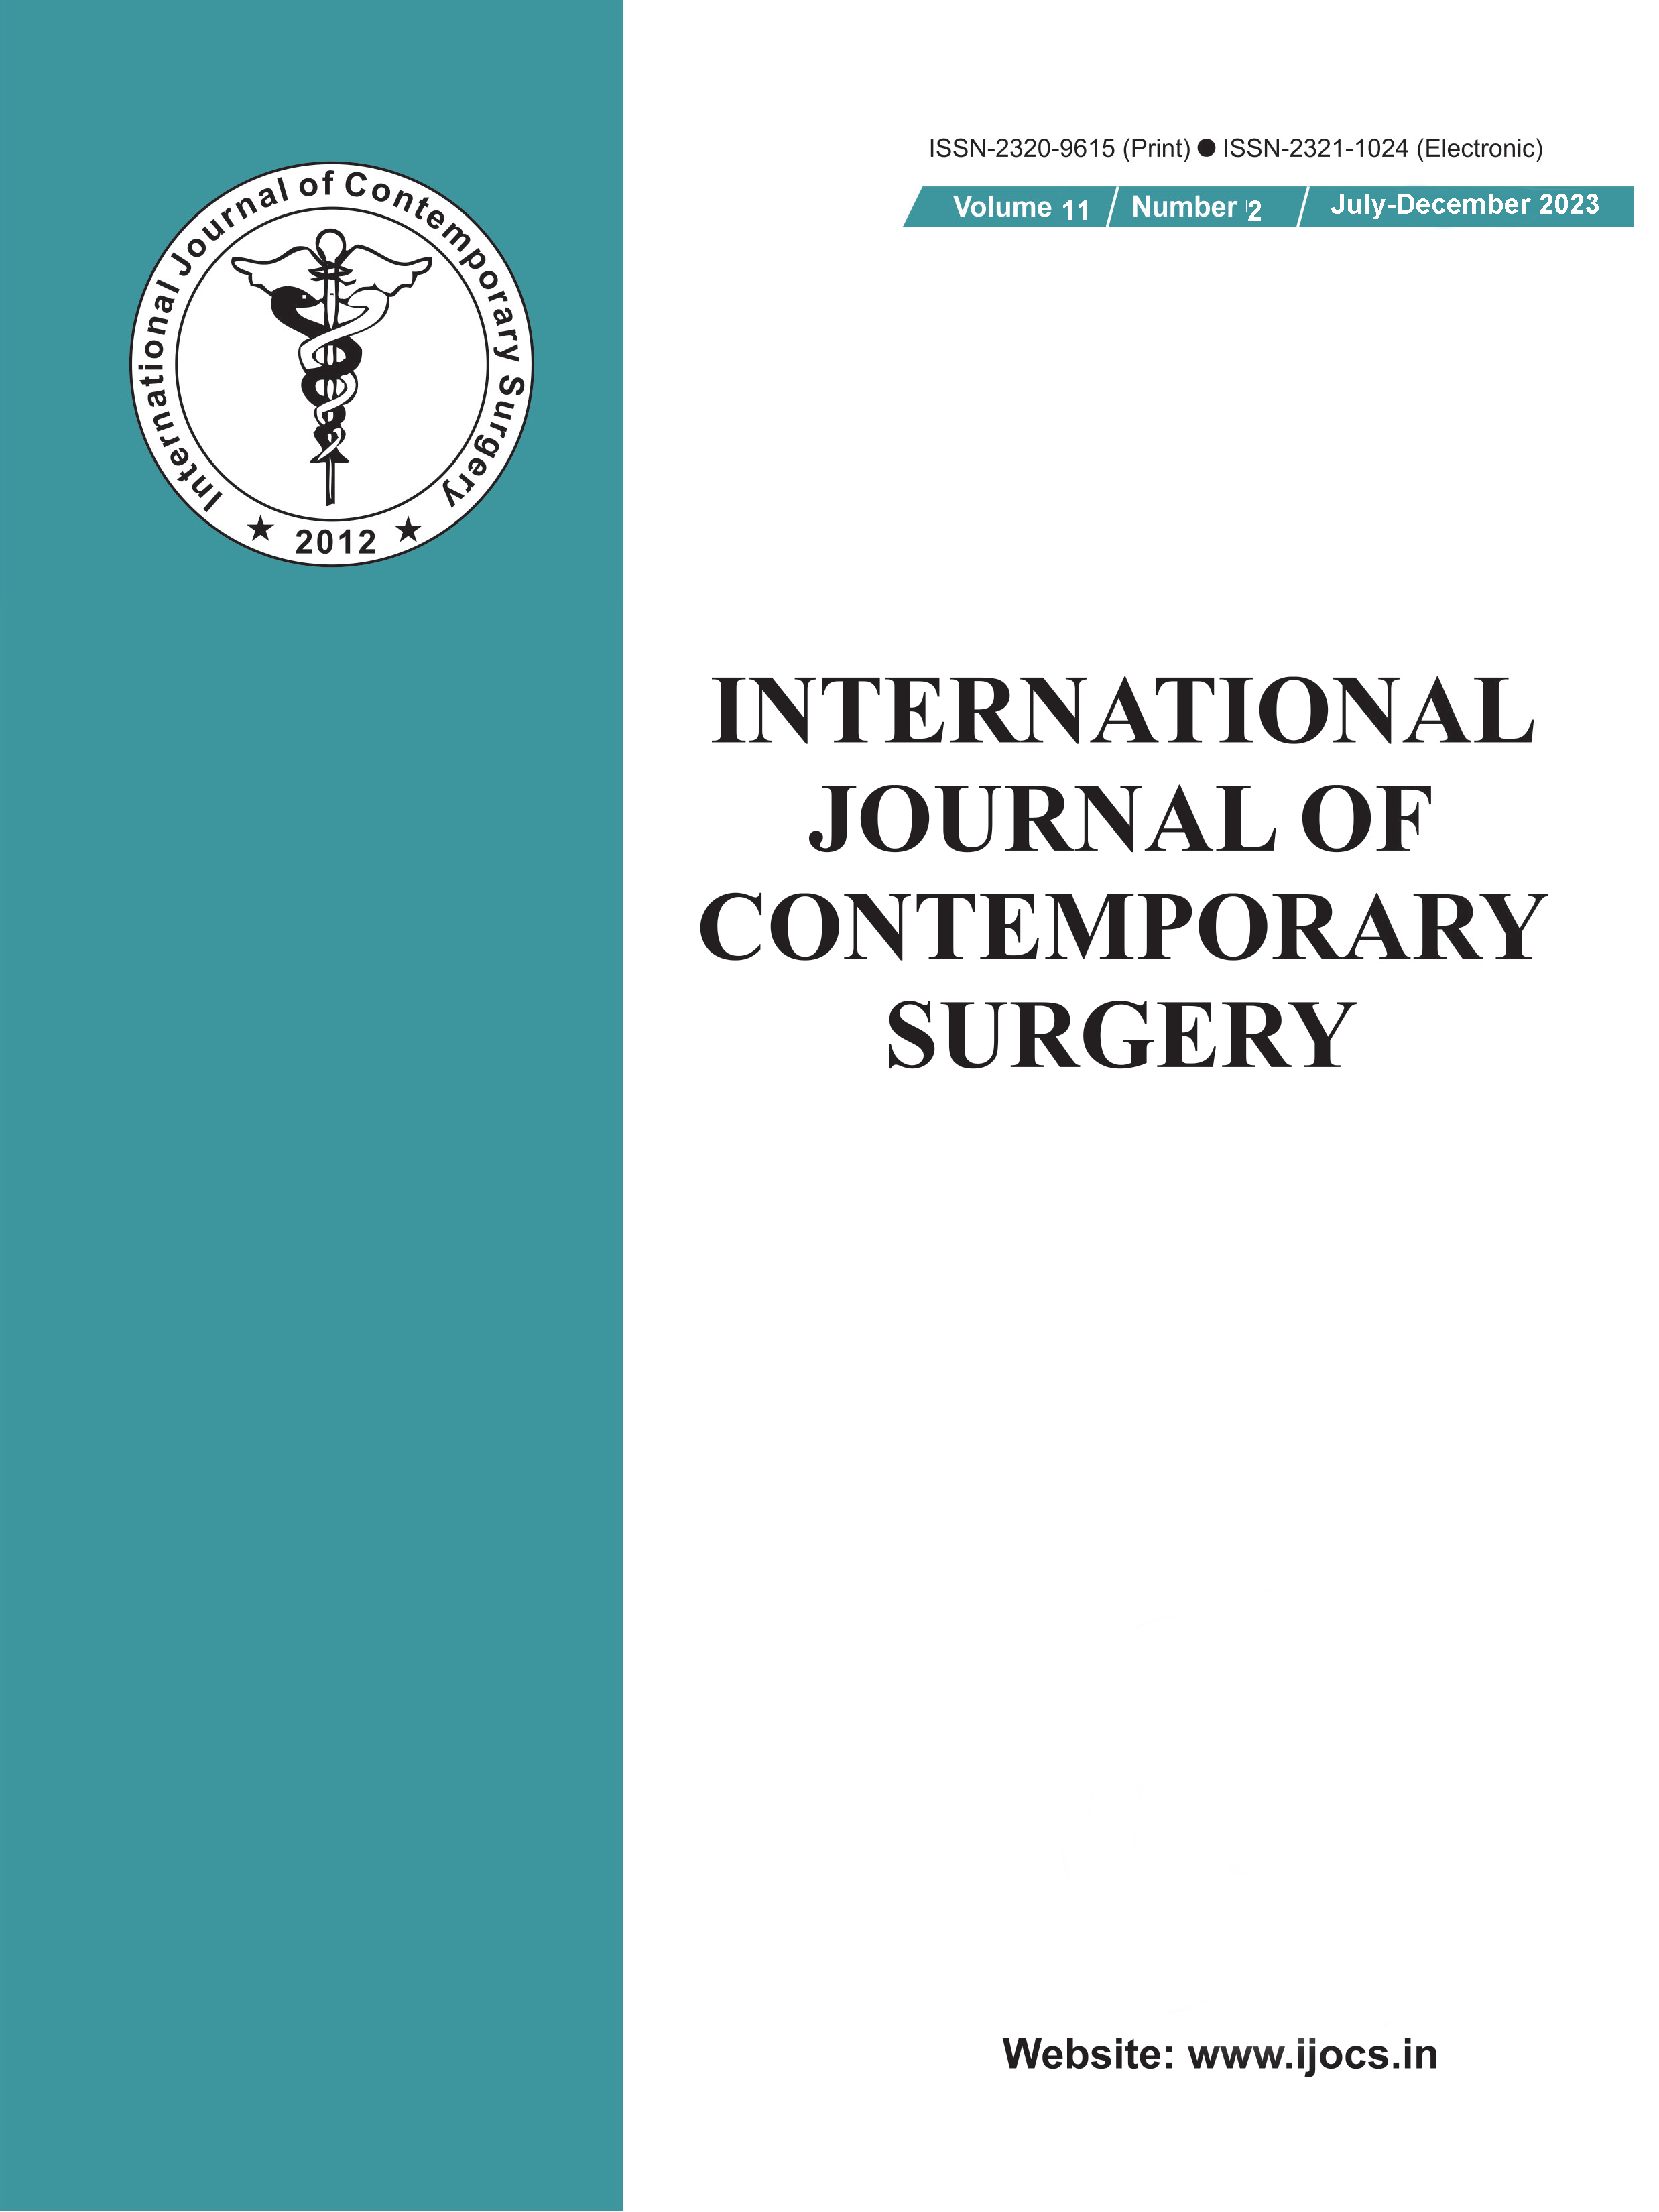 					View Vol. 11 No. 2 (2023): International Journal of Contemporary Surgery / Volume 11 No. 2 July-December 2023
				